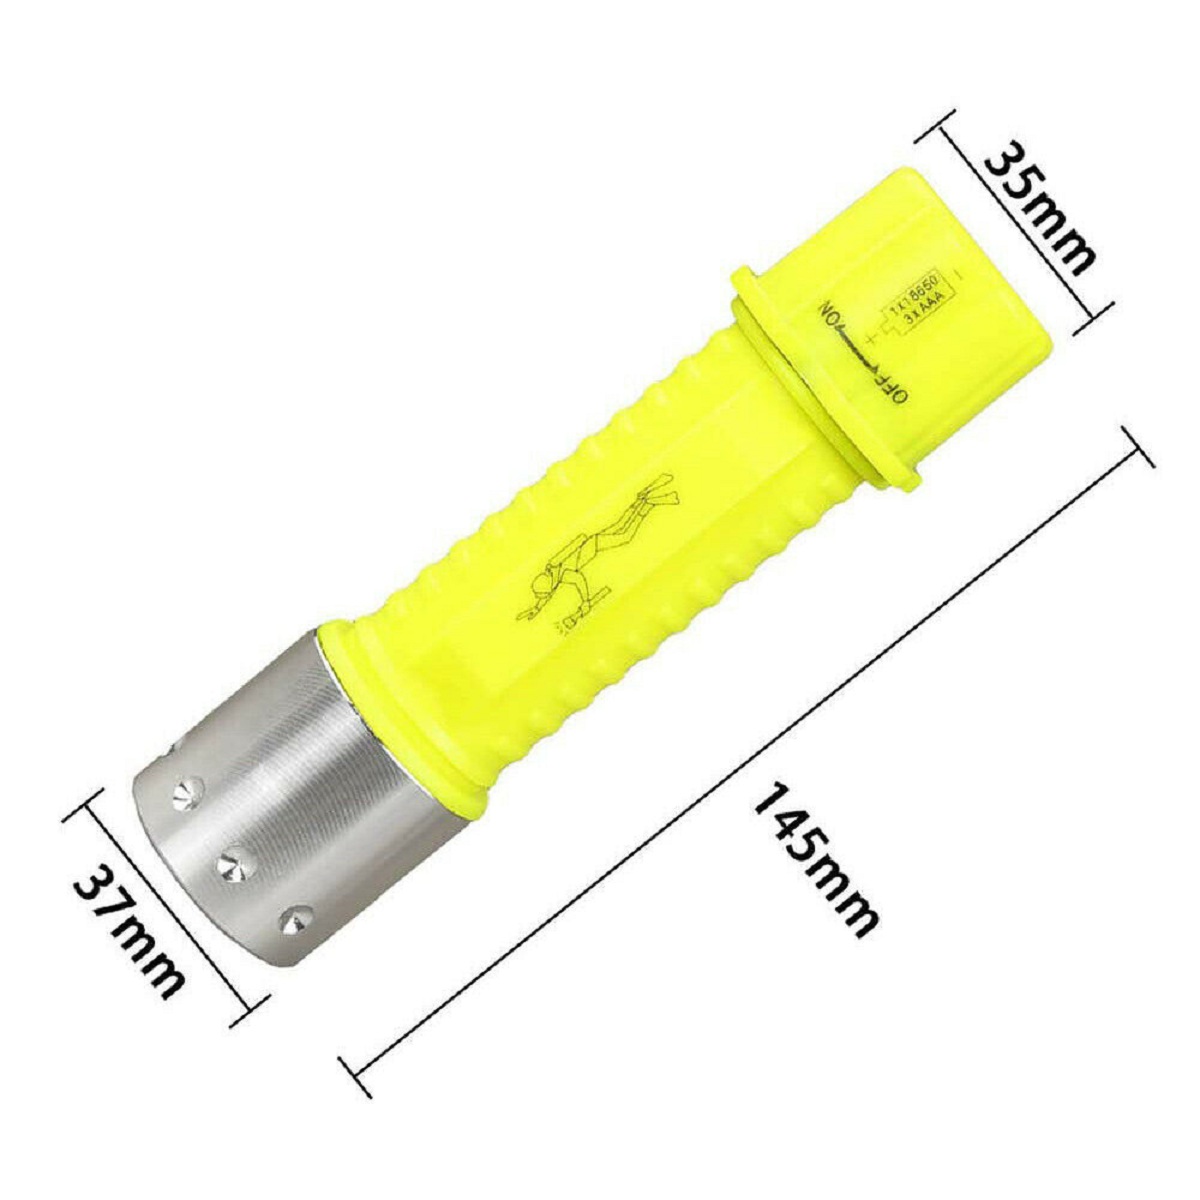 LED-XM-T6-Professional-Diving-Flashlight-Scuba-Safety-Light-Diving-Lamp-Diving-Lighting-Tool-Work-Li-1568985-8